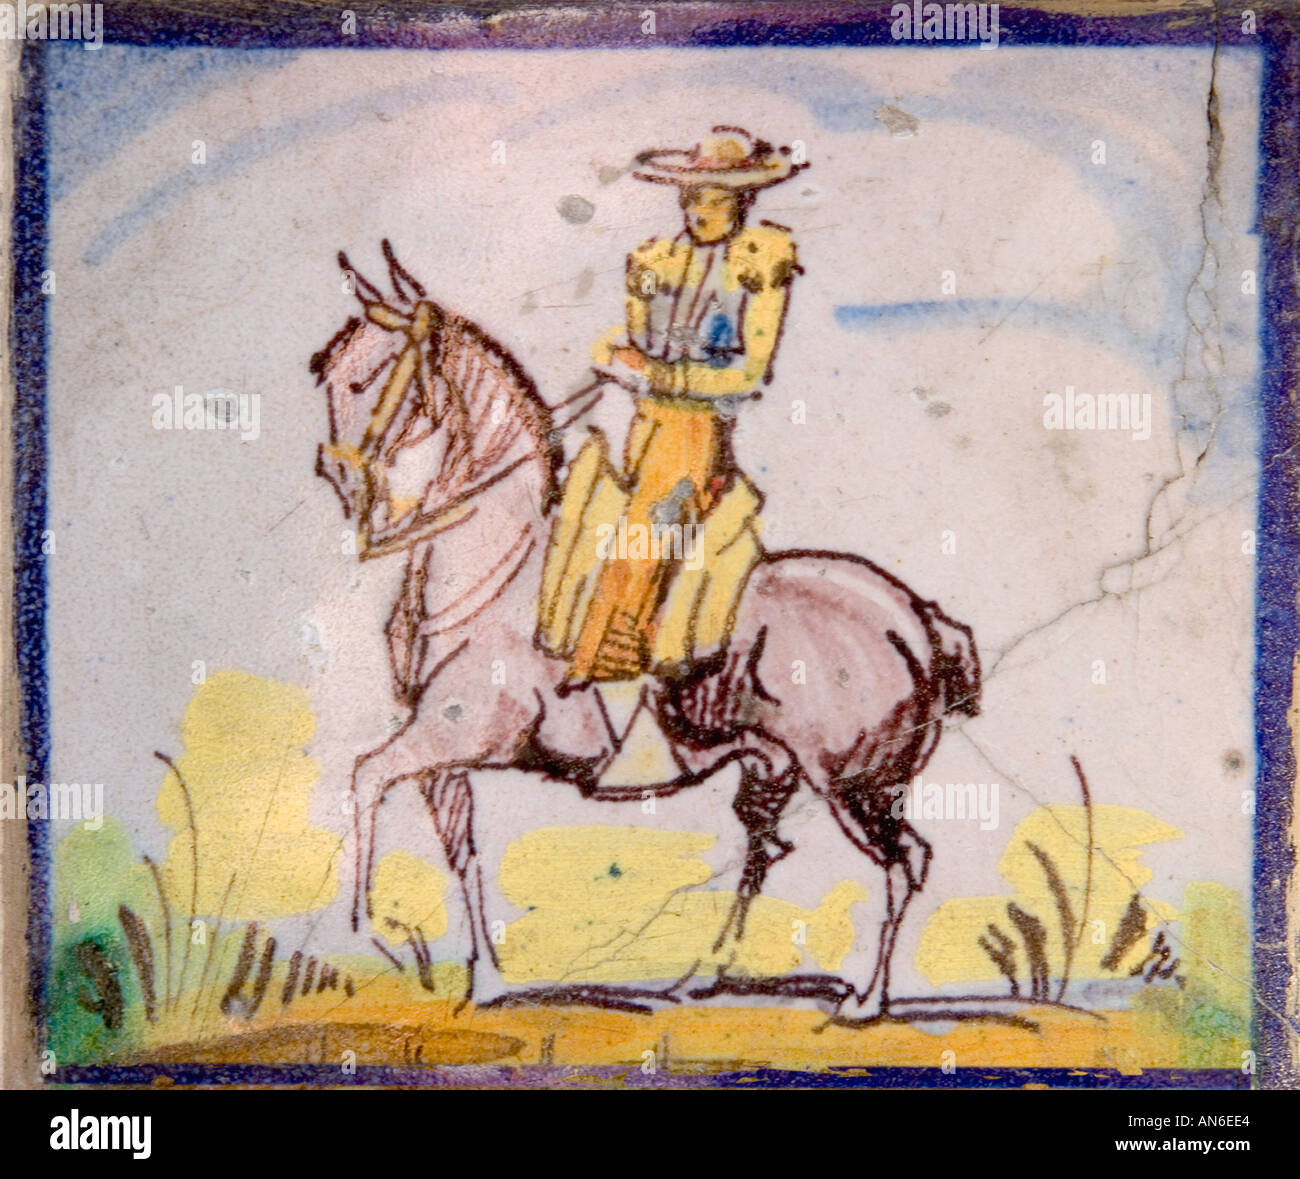 Ceramic tile of Spanish man riding horse Stock Photo